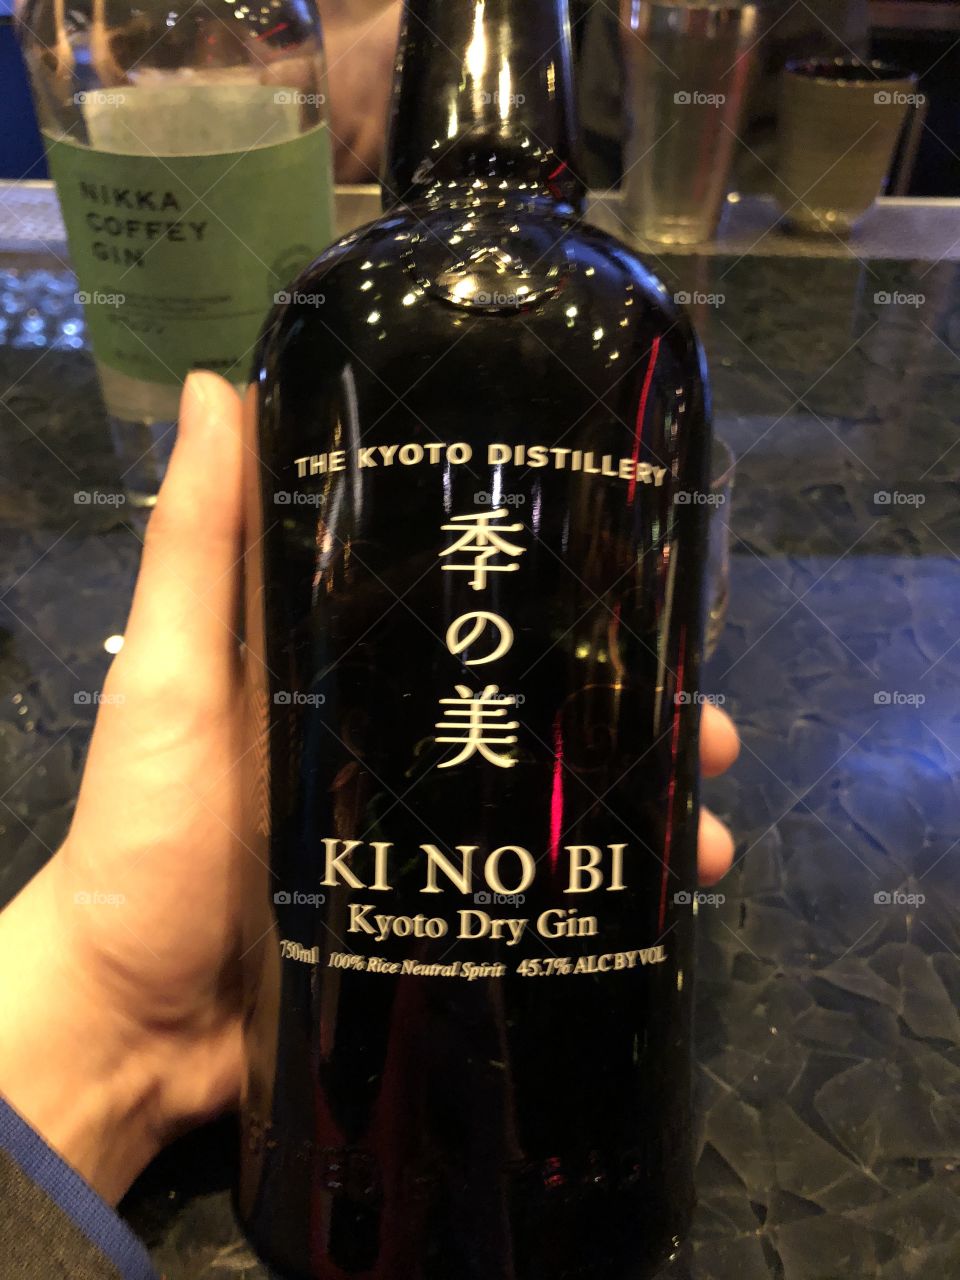 Japanese Gin